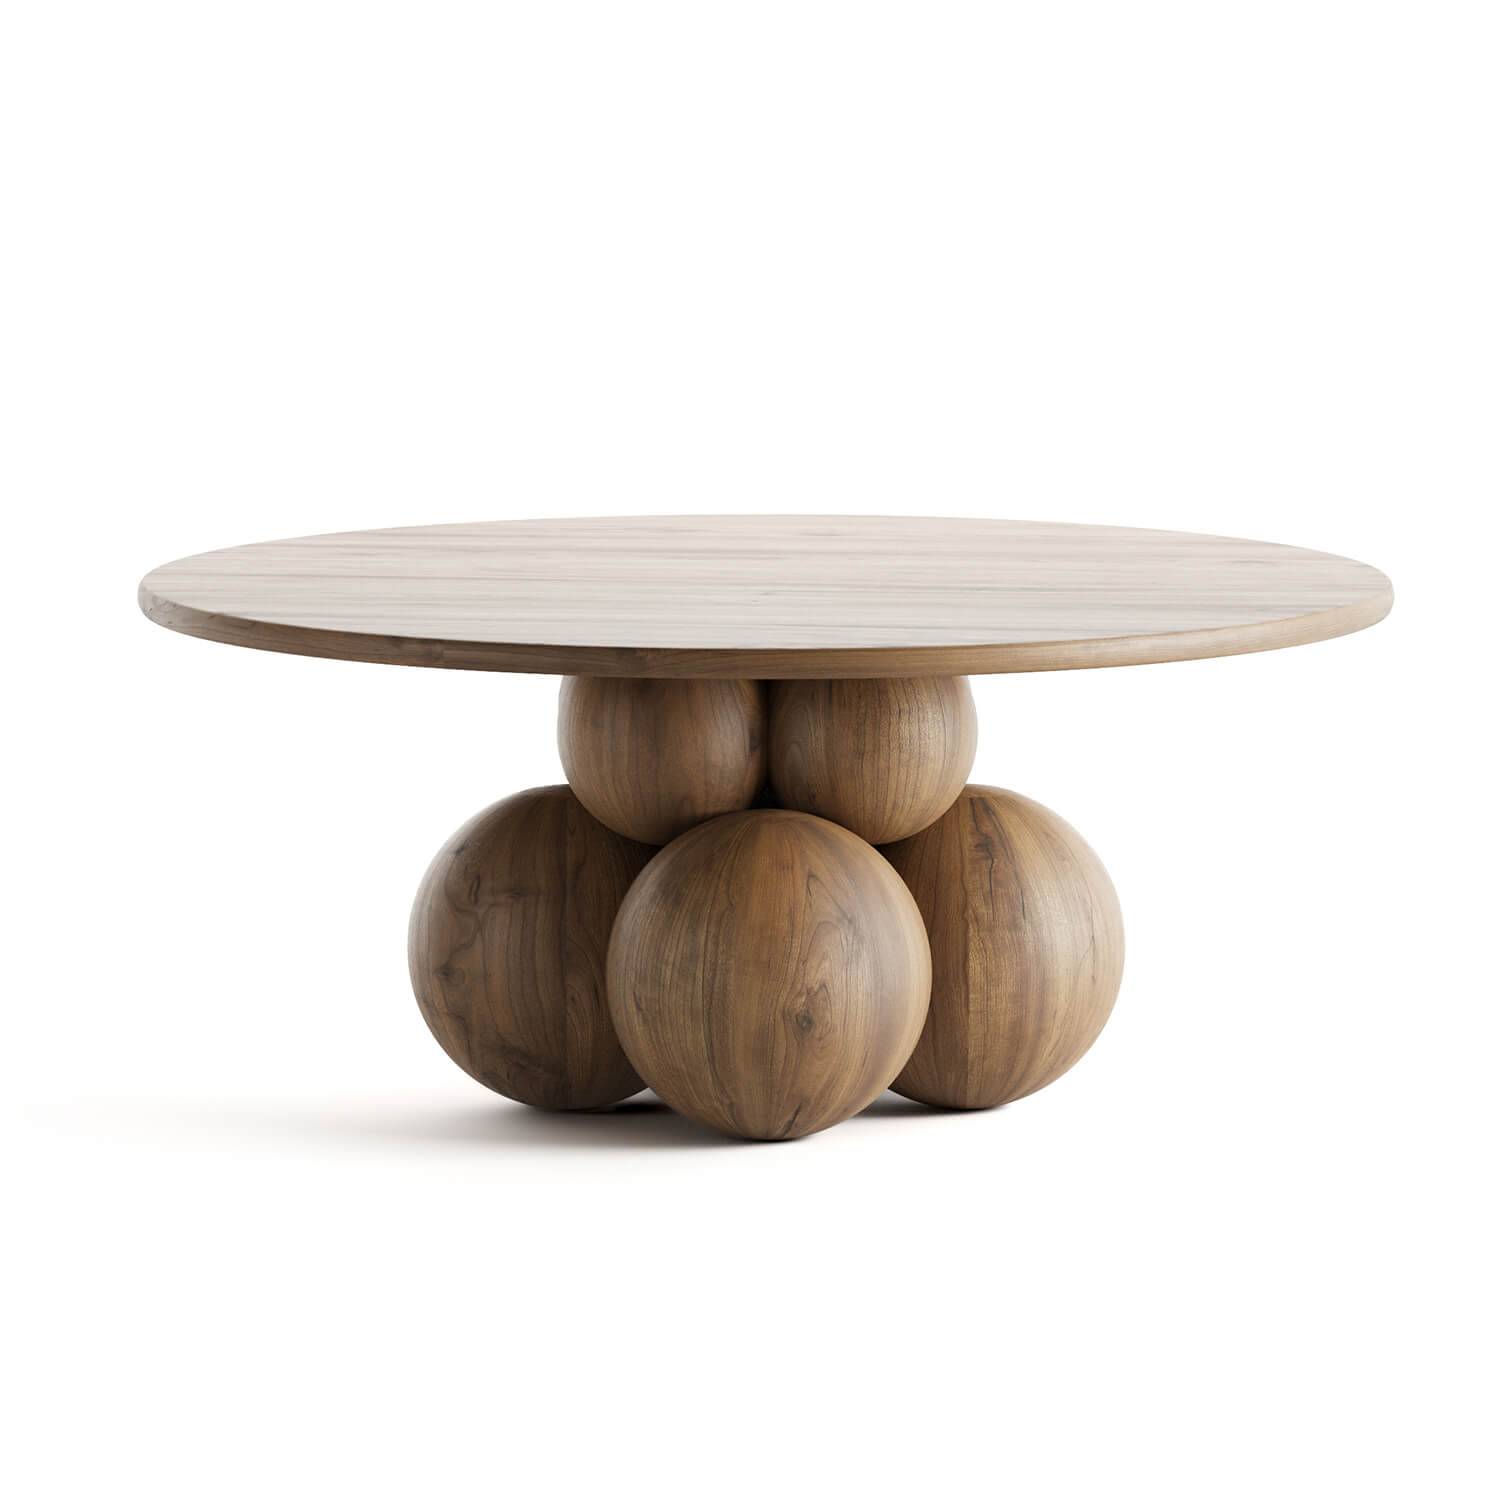 Hermes coffee table in teak wood finish